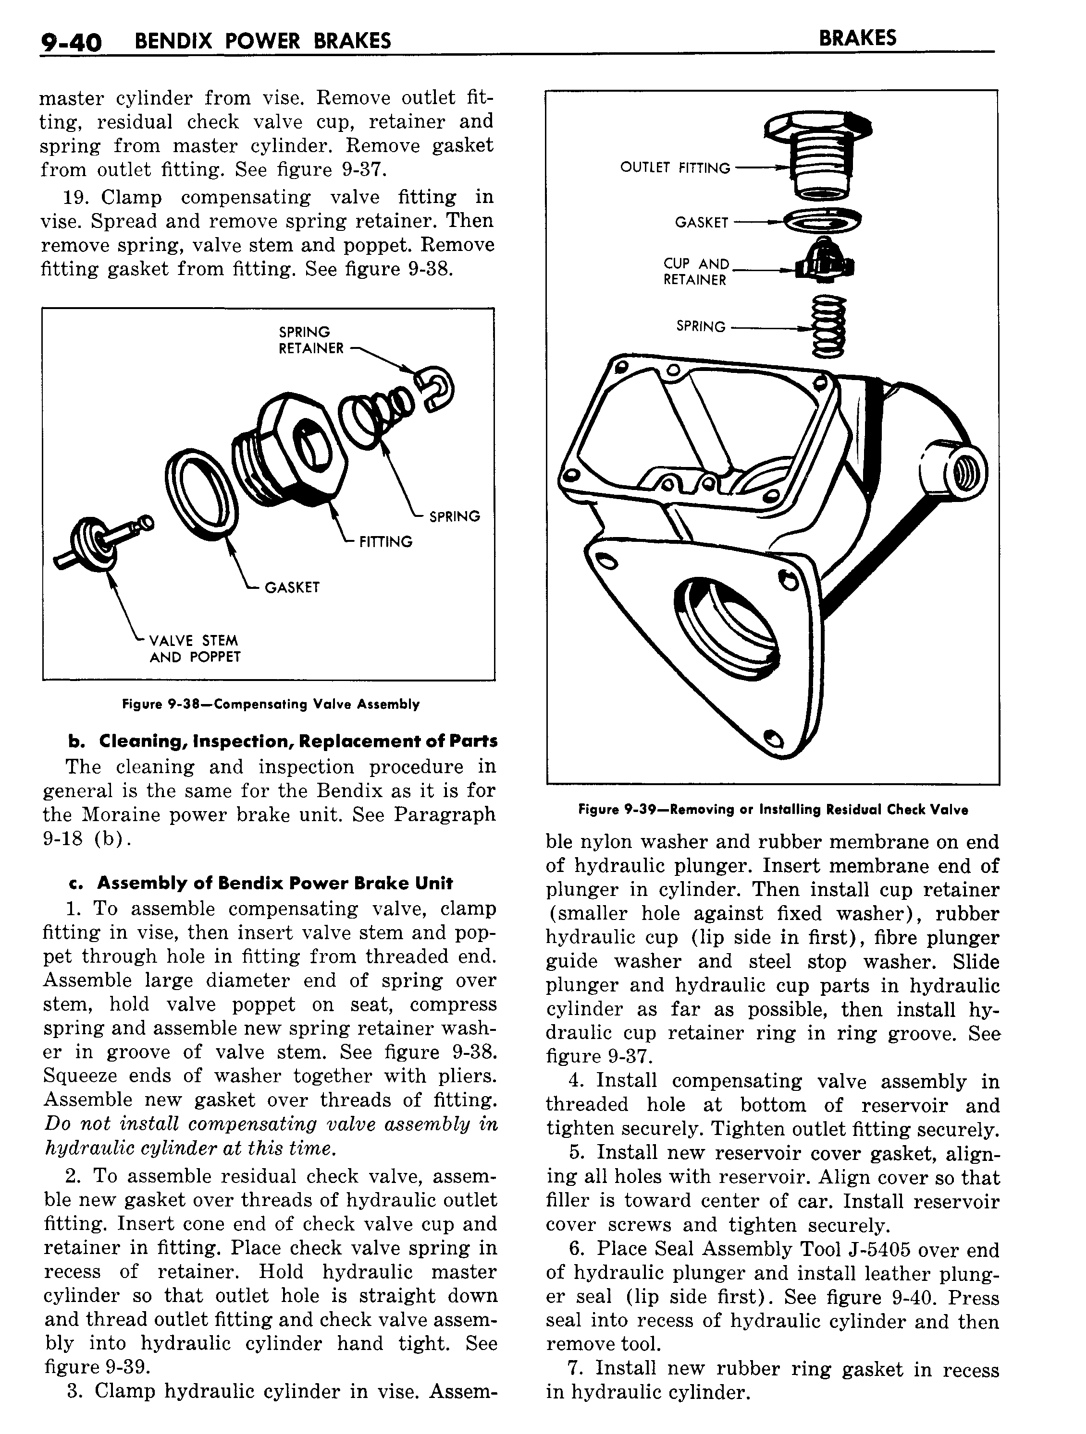 n_10 1957 Buick Shop Manual - Brakes-040-040.jpg